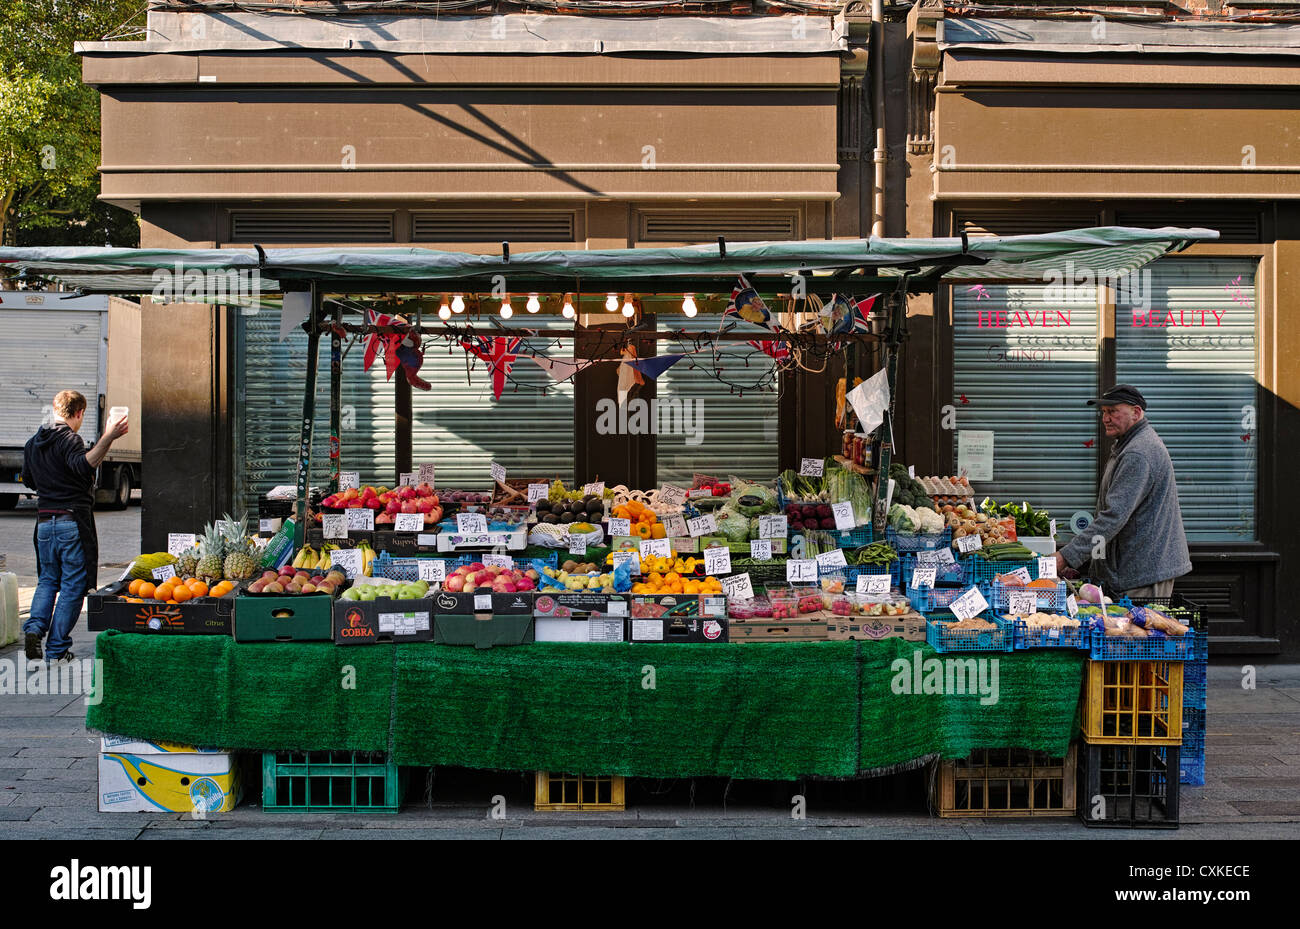 Whitecross Street market greengrocer Stock Photo